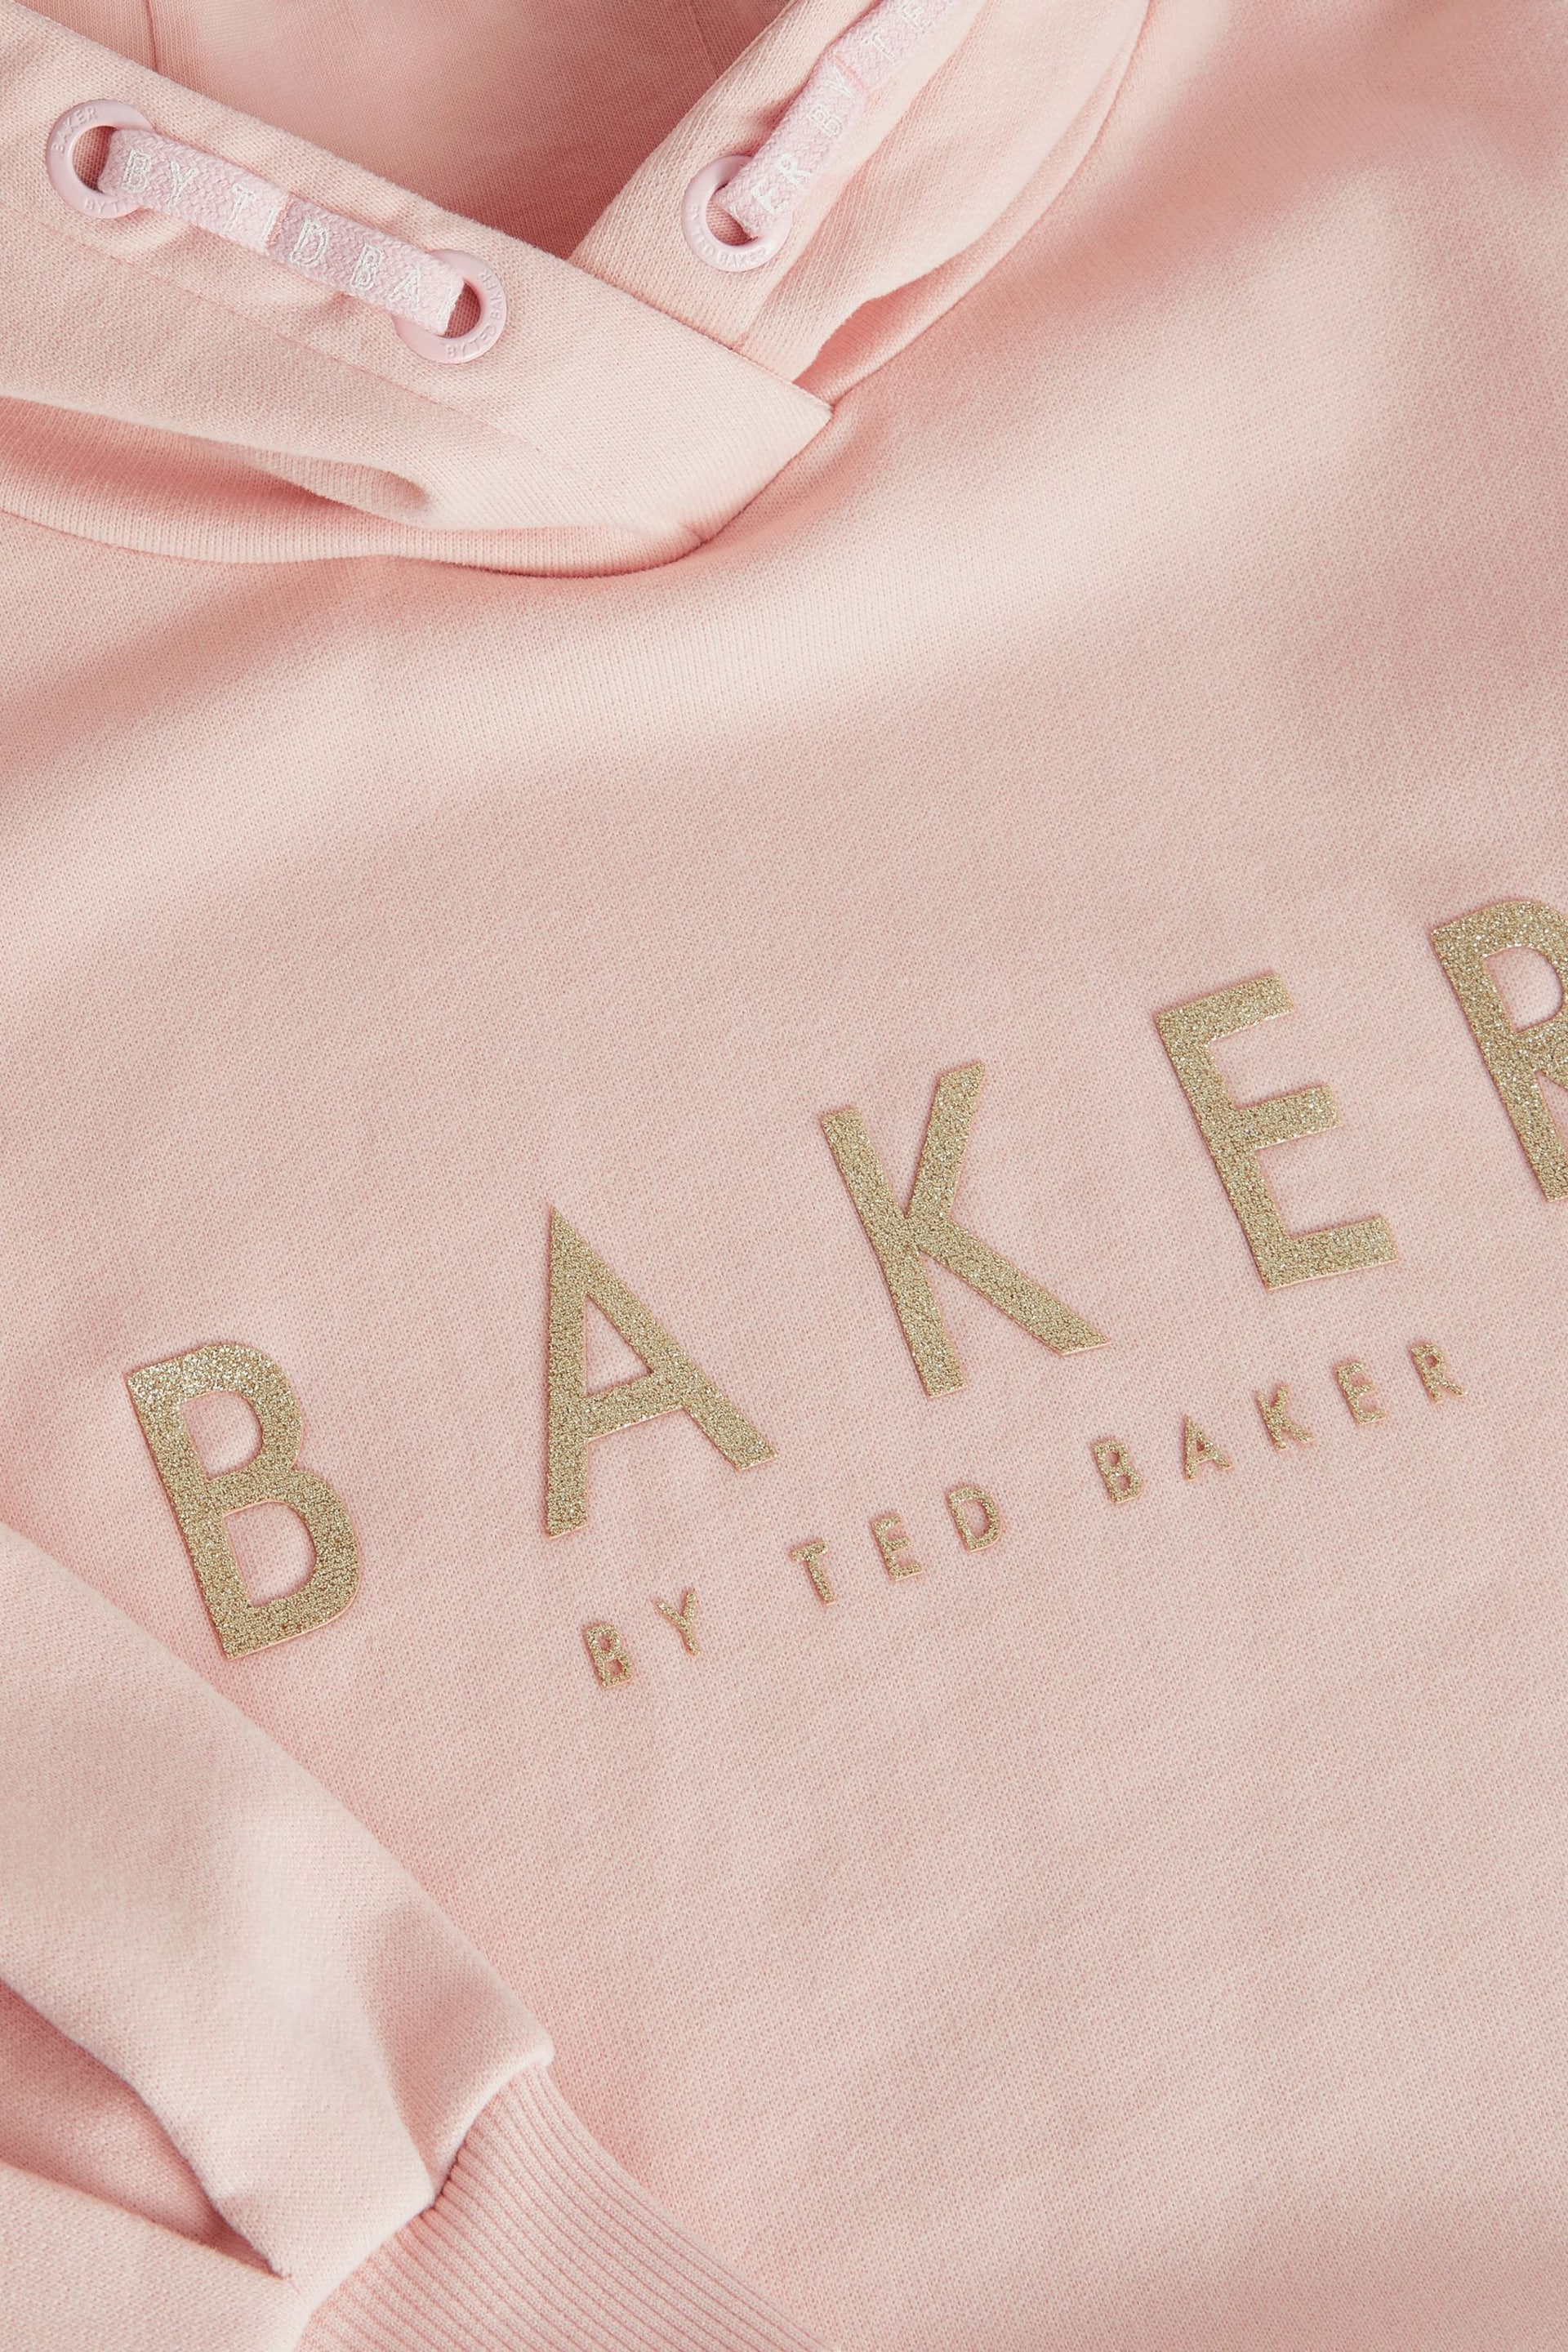 Baker by Ted Baker Logo Hoodie - Image 7 of 7